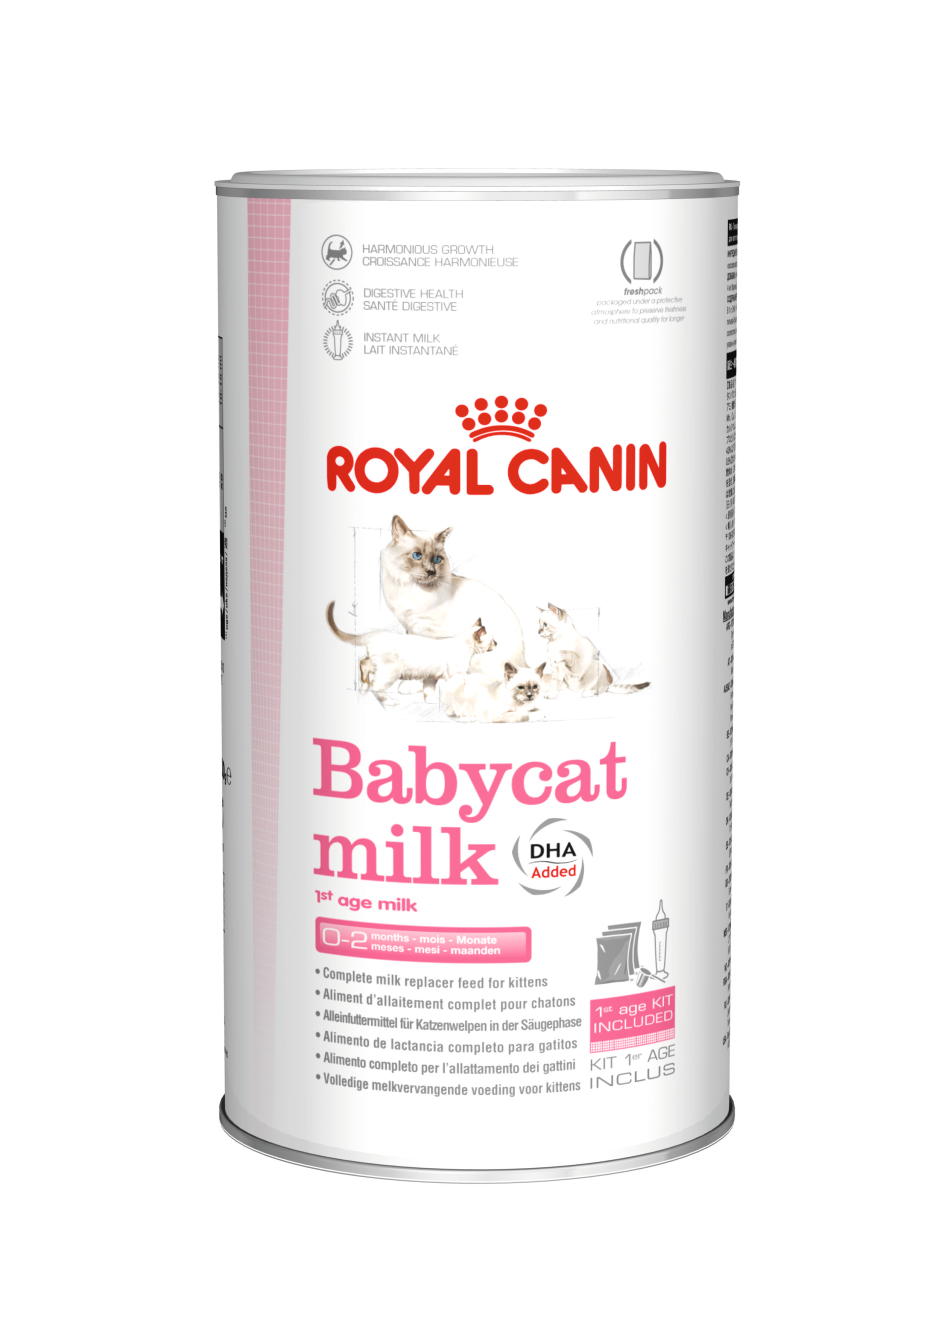 Royal Canin Babycat milk packaging 